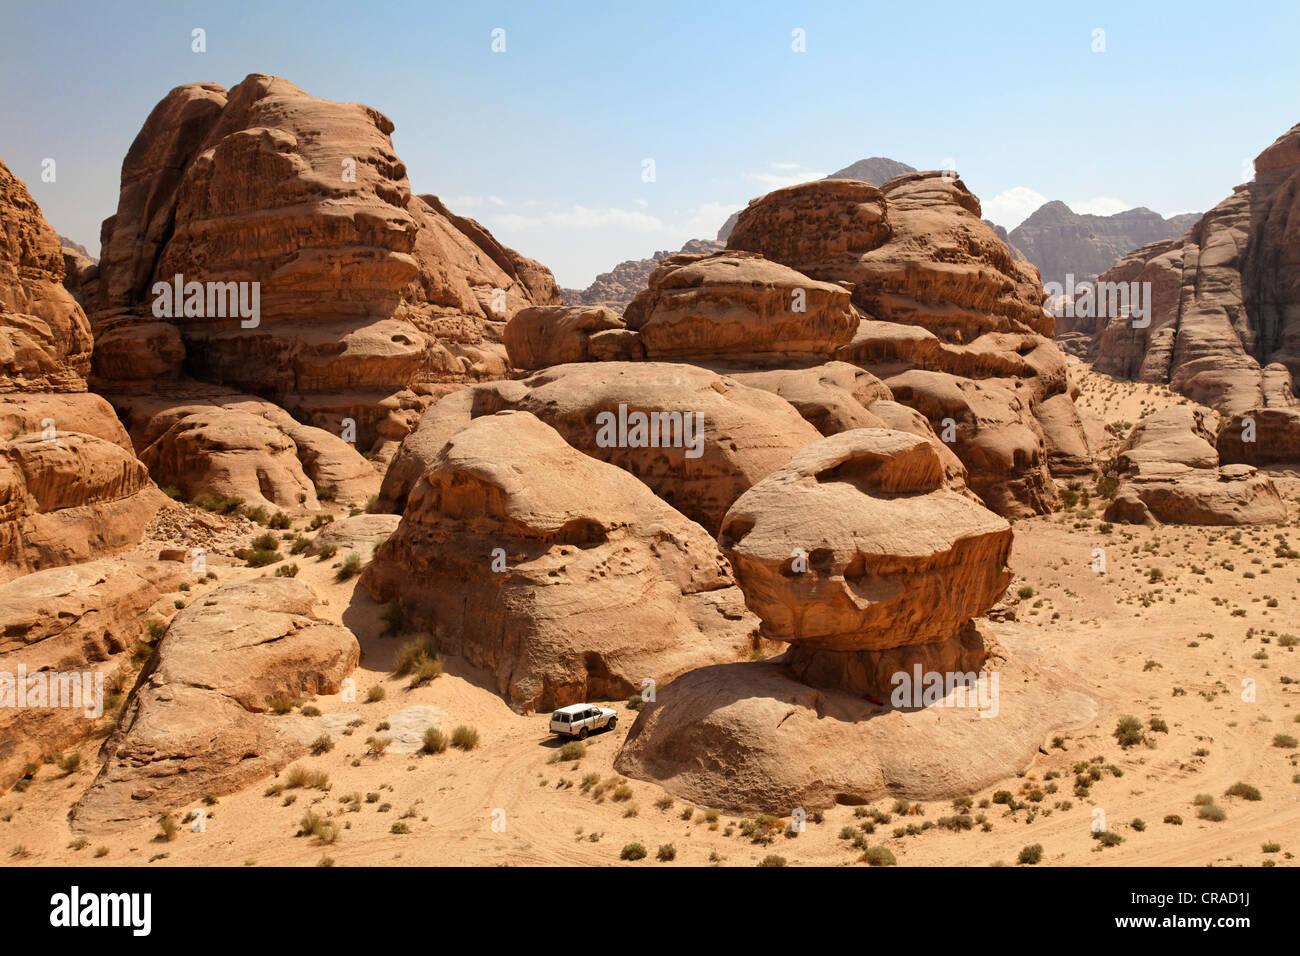 Off-road vehicle driving between rocks in the desert, Wadi Rum, Hashemite Kingdom of Jordan, Middle East, Asia Stock Photo